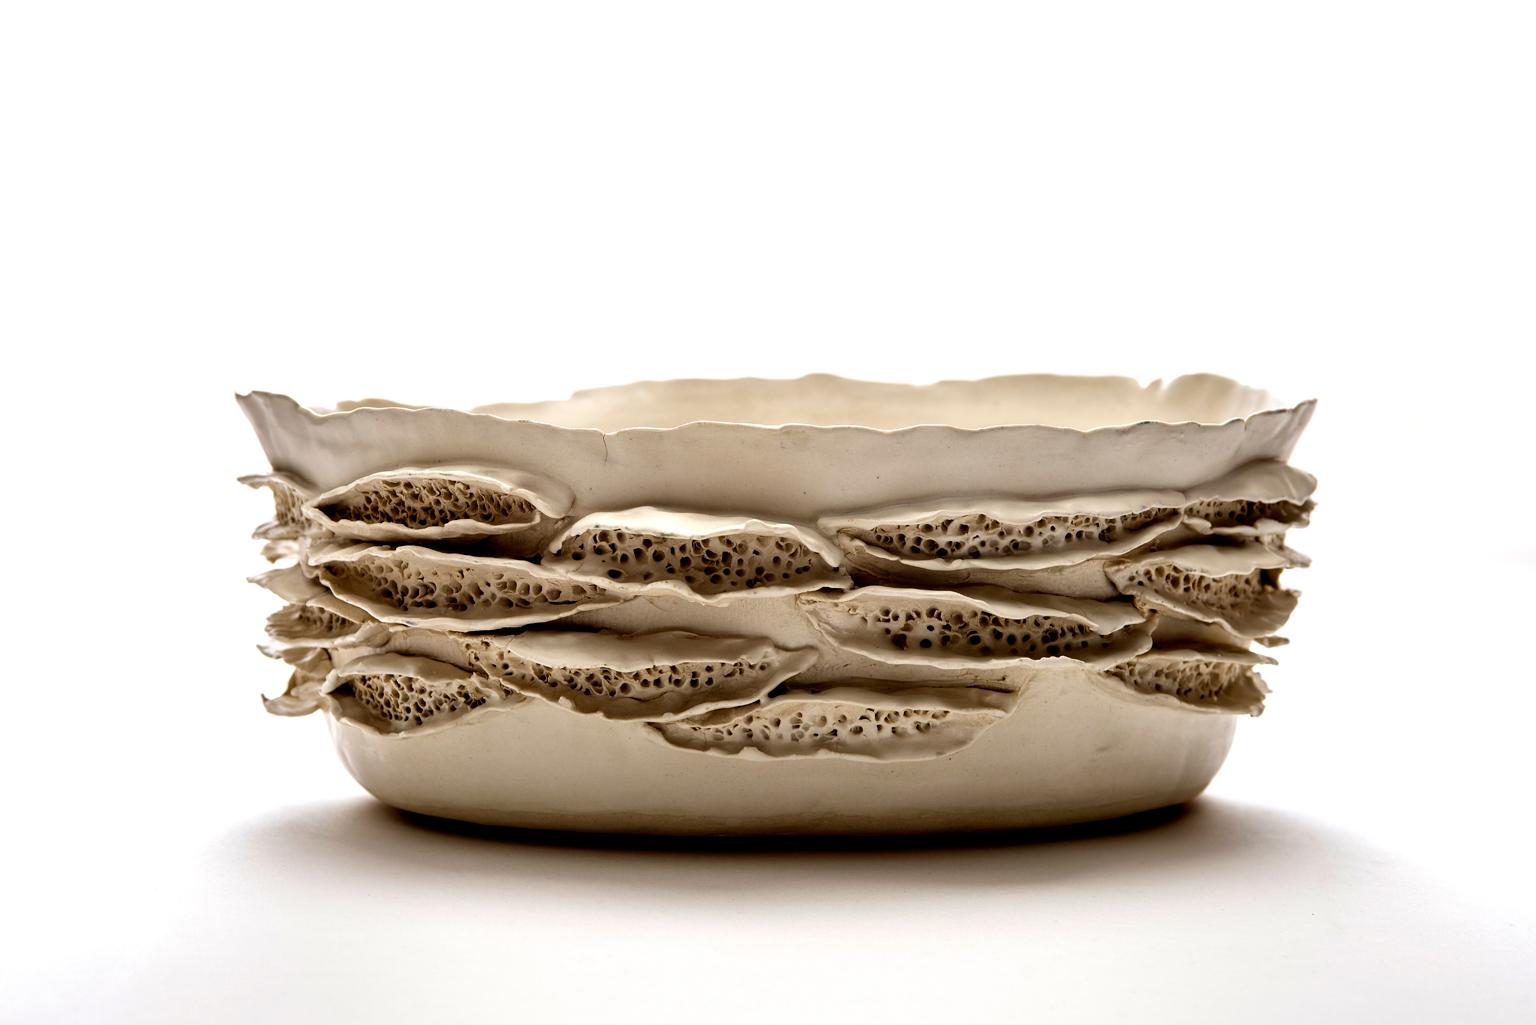 Contemporary Large Bowl (I) Textured Ceramic Vessel by Trish DeMasi